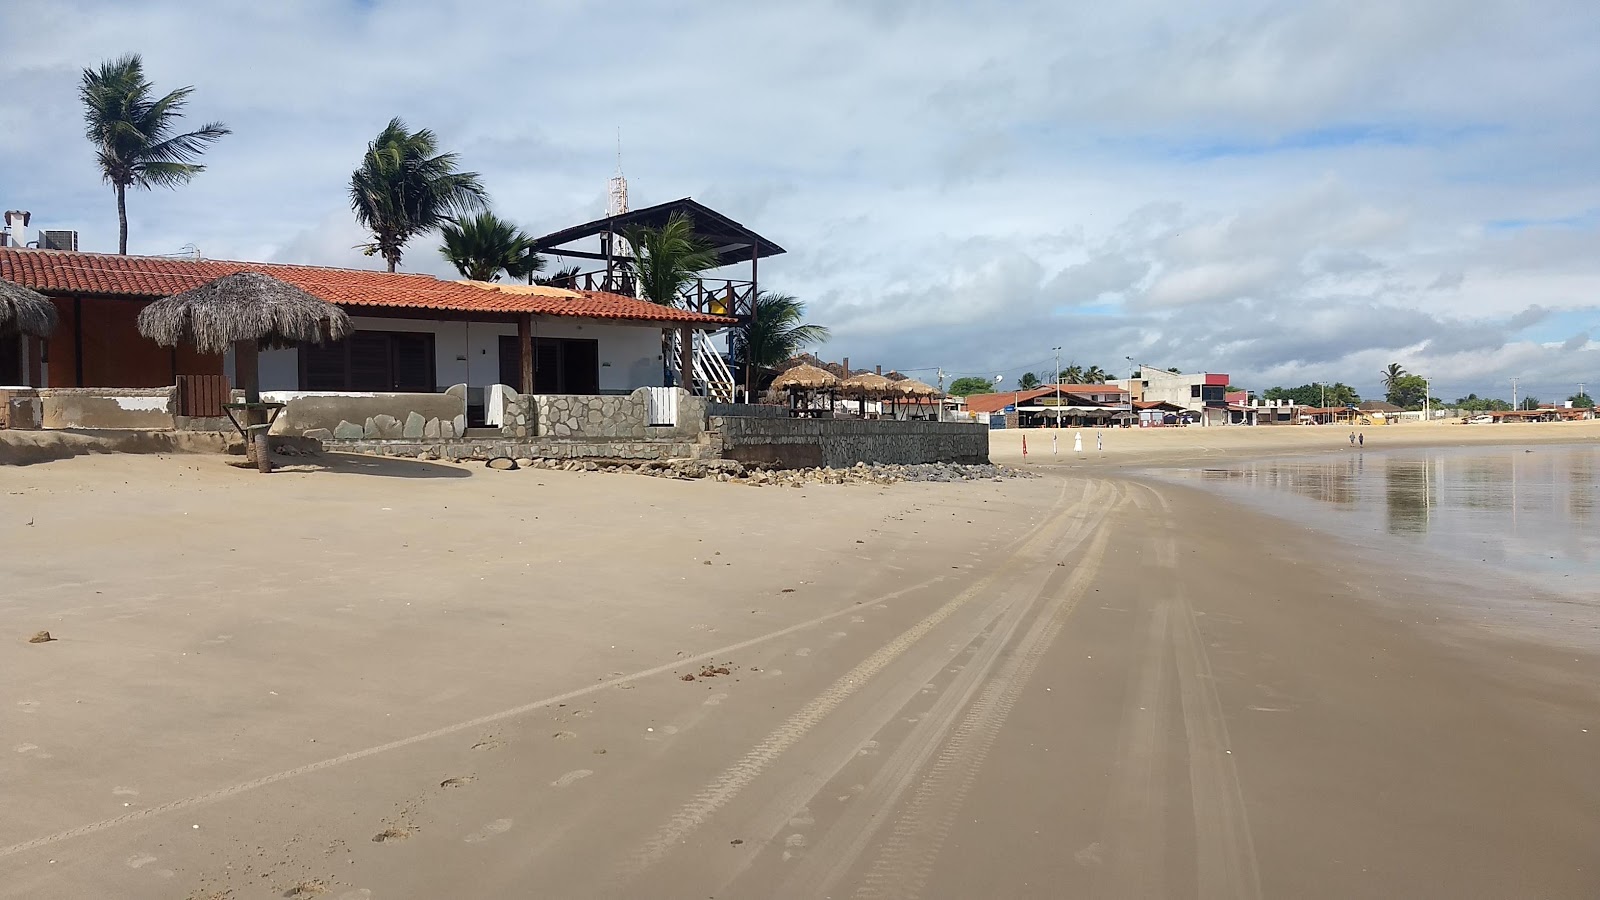 Fotografija Plaža Galinhos in naselje